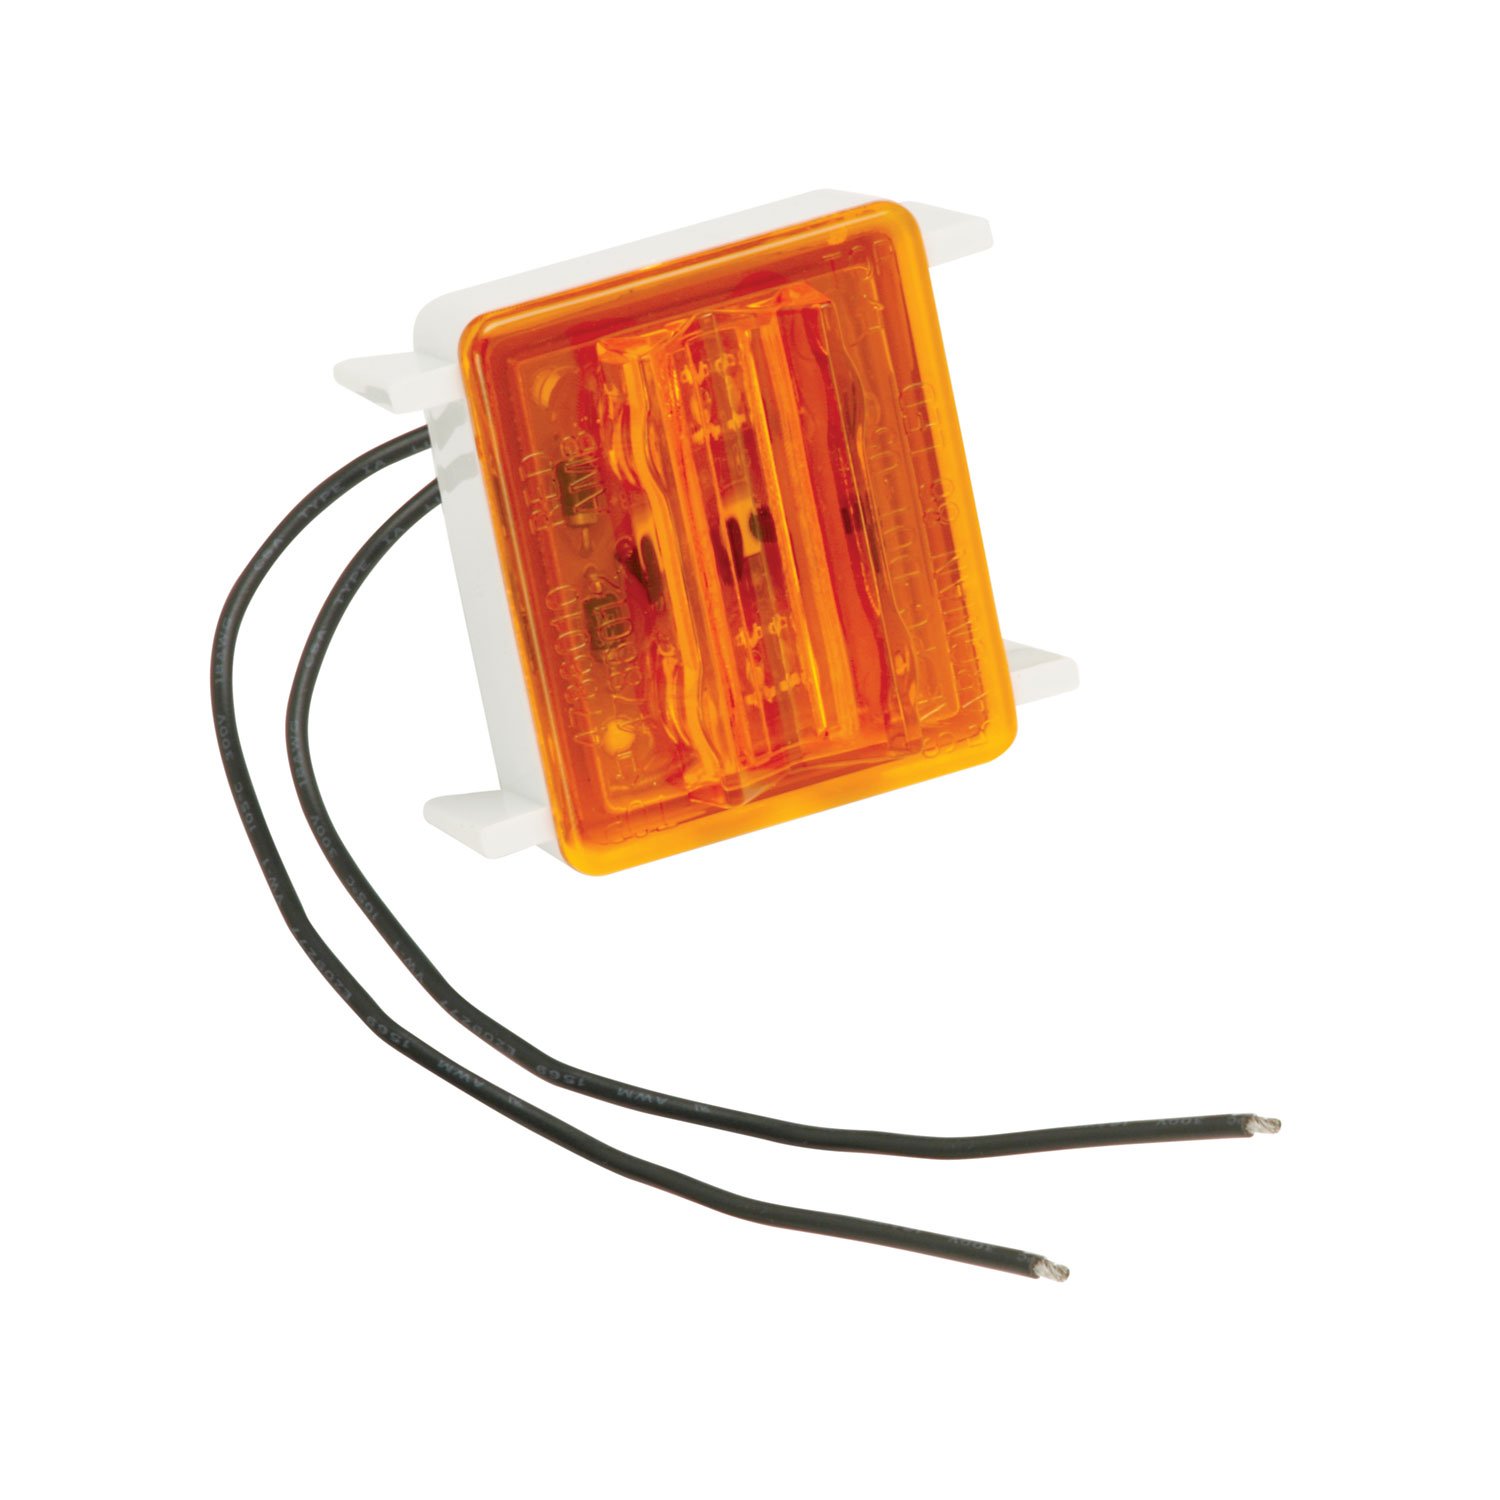 Bargman 42-86-412 LED Upgrade Clearance Light - Amber